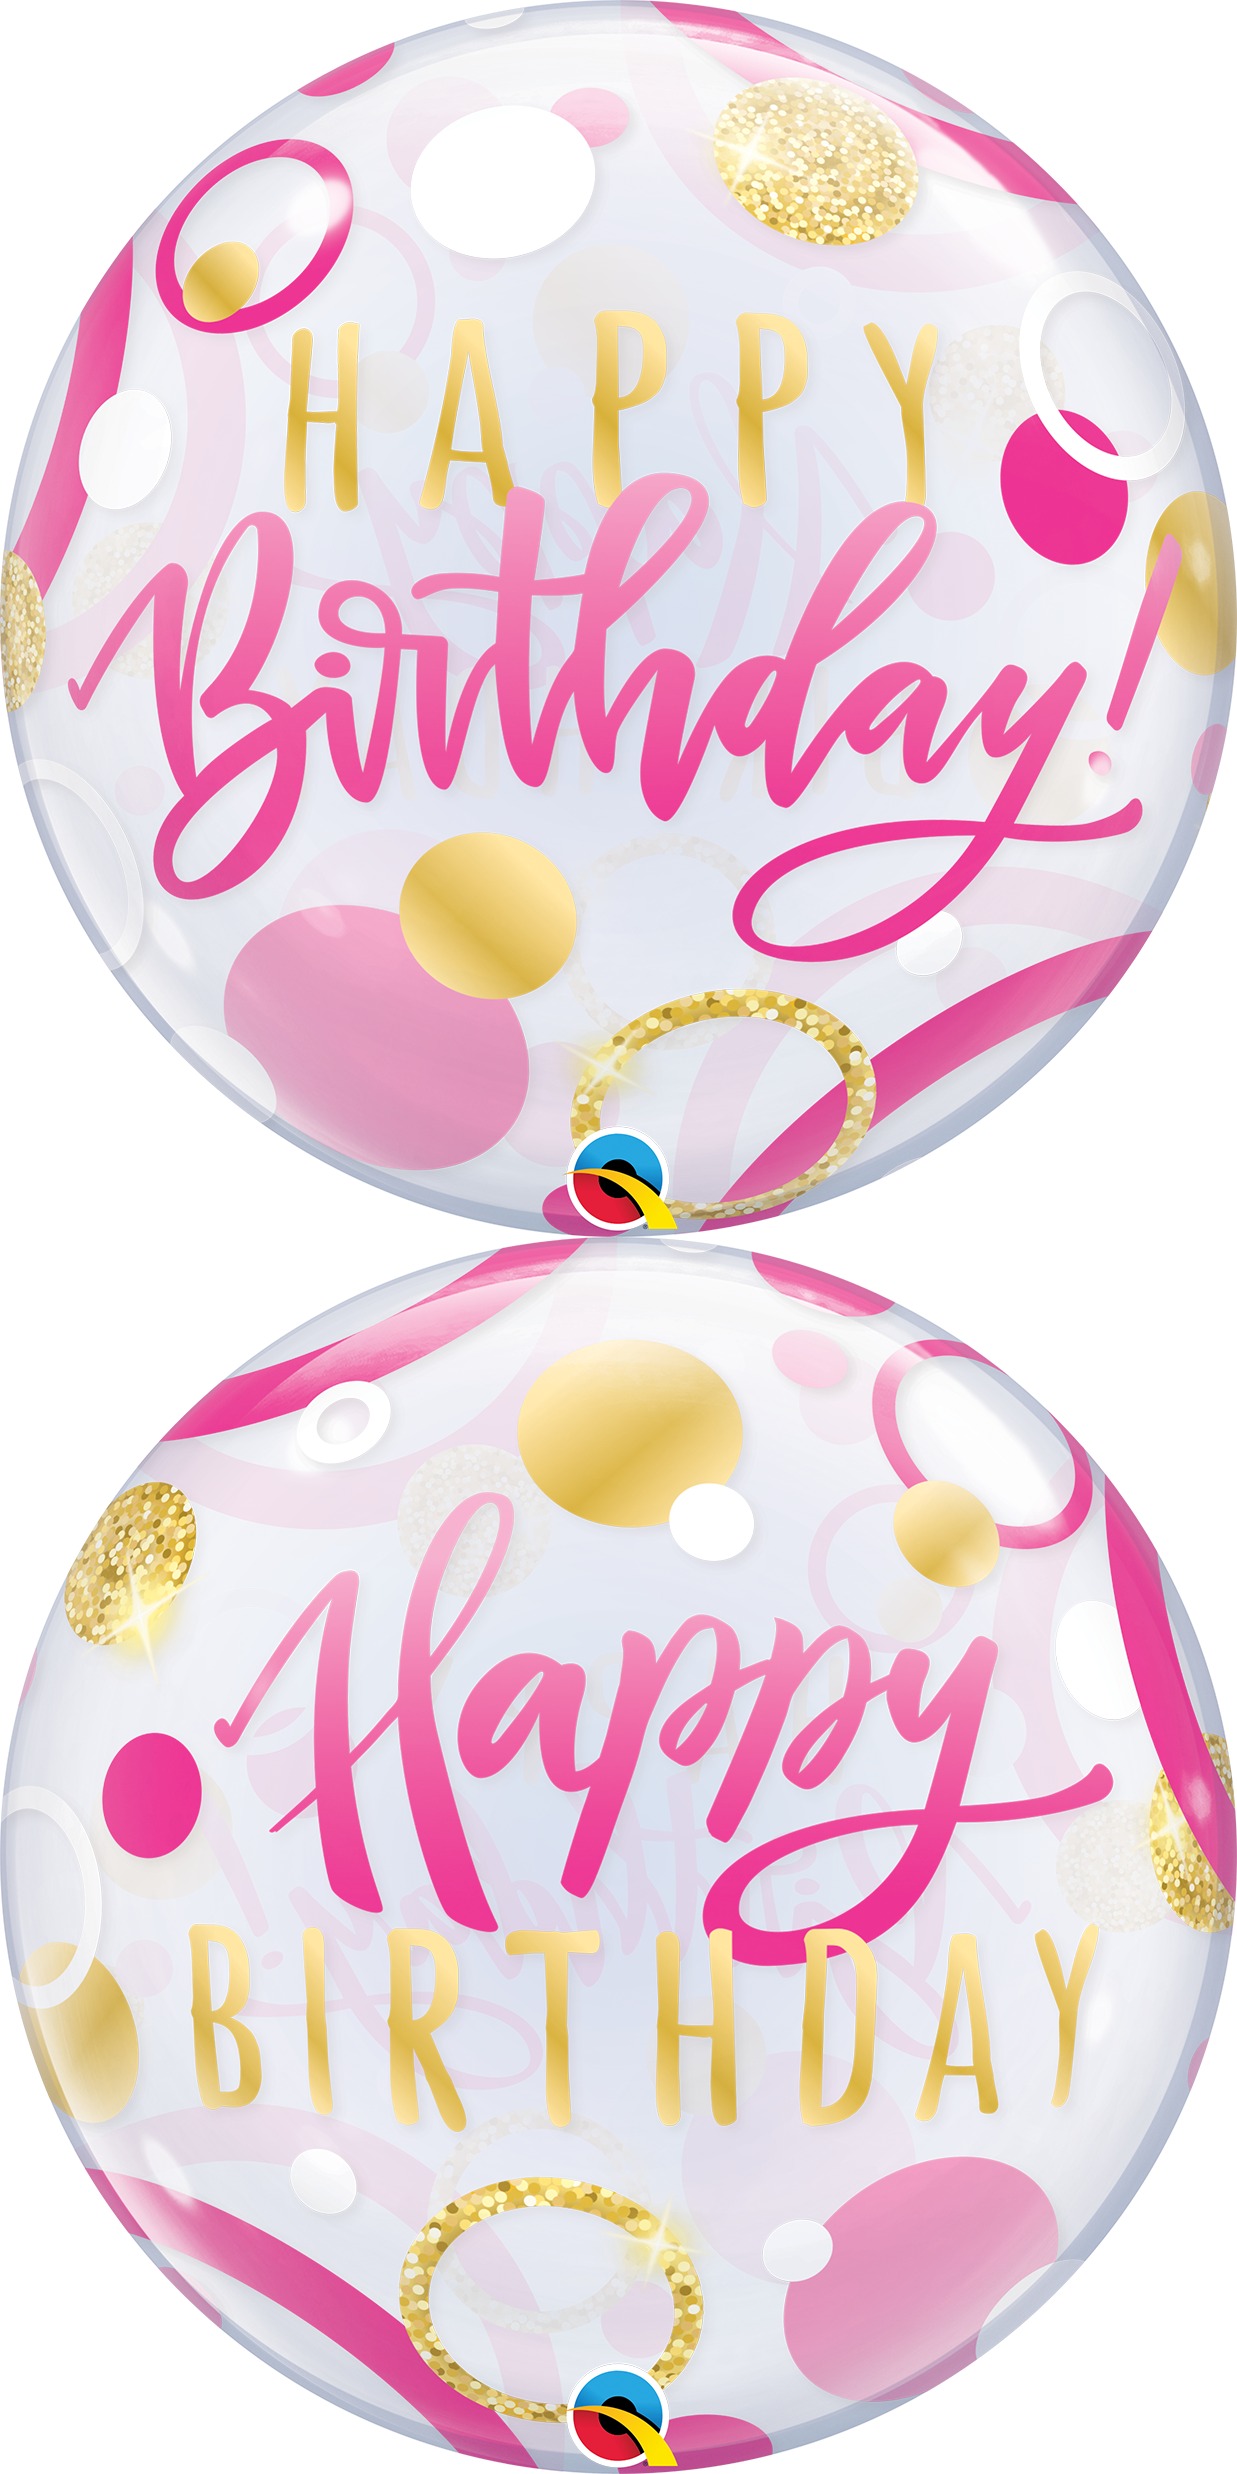 Disney Descendants Happy Birthday Mylar Foil Balloon 22"